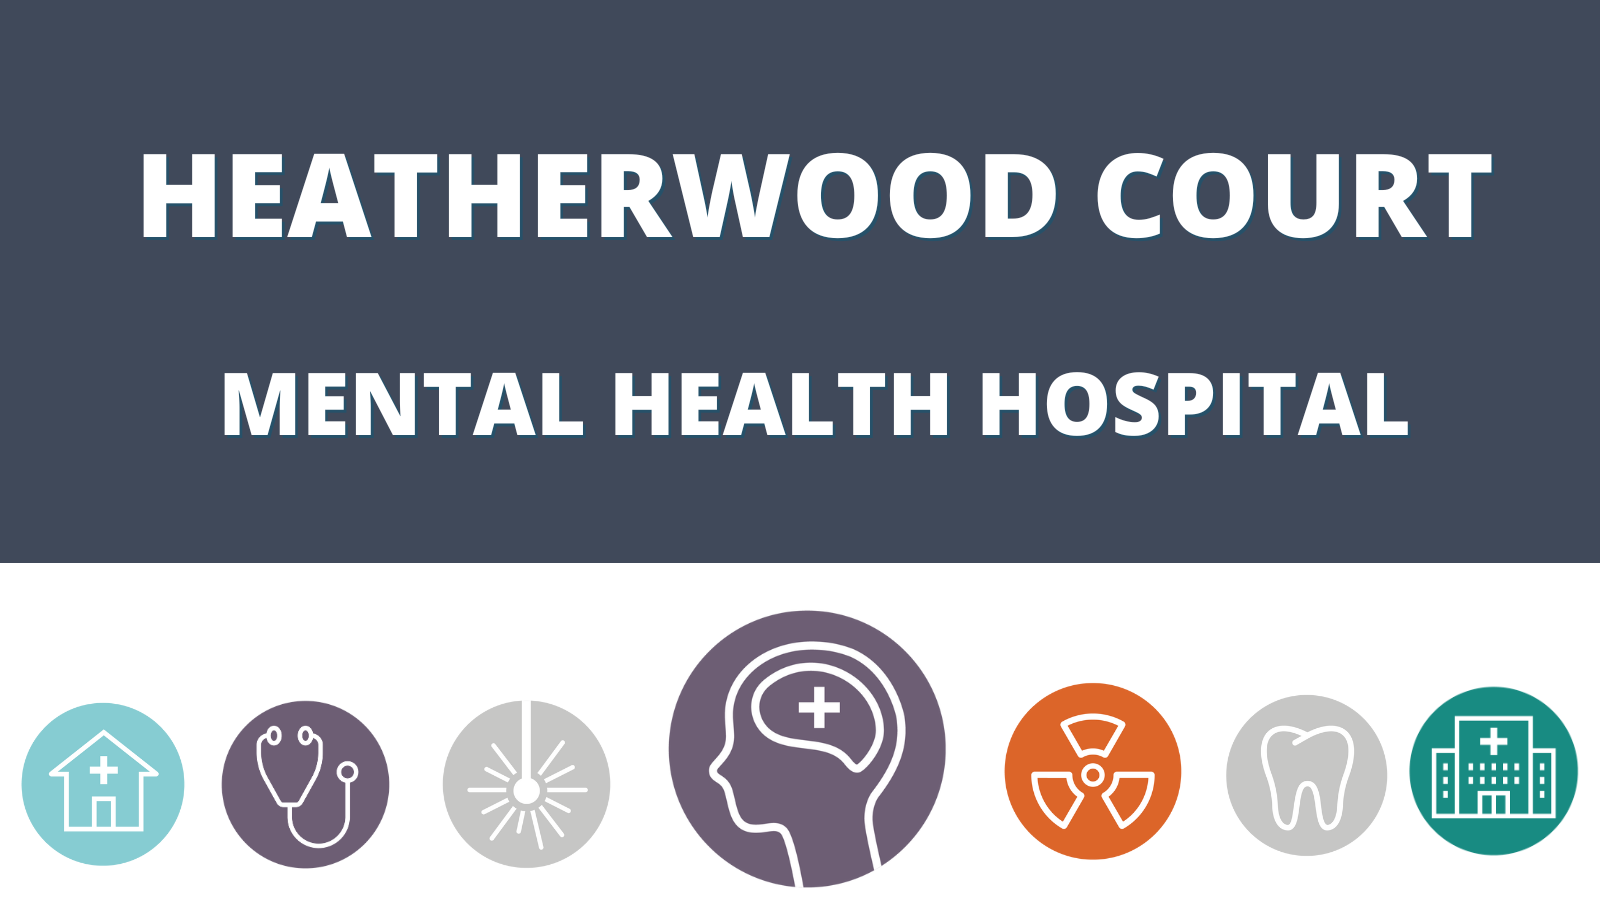 Heatherwood Court - Mental Health Hospital